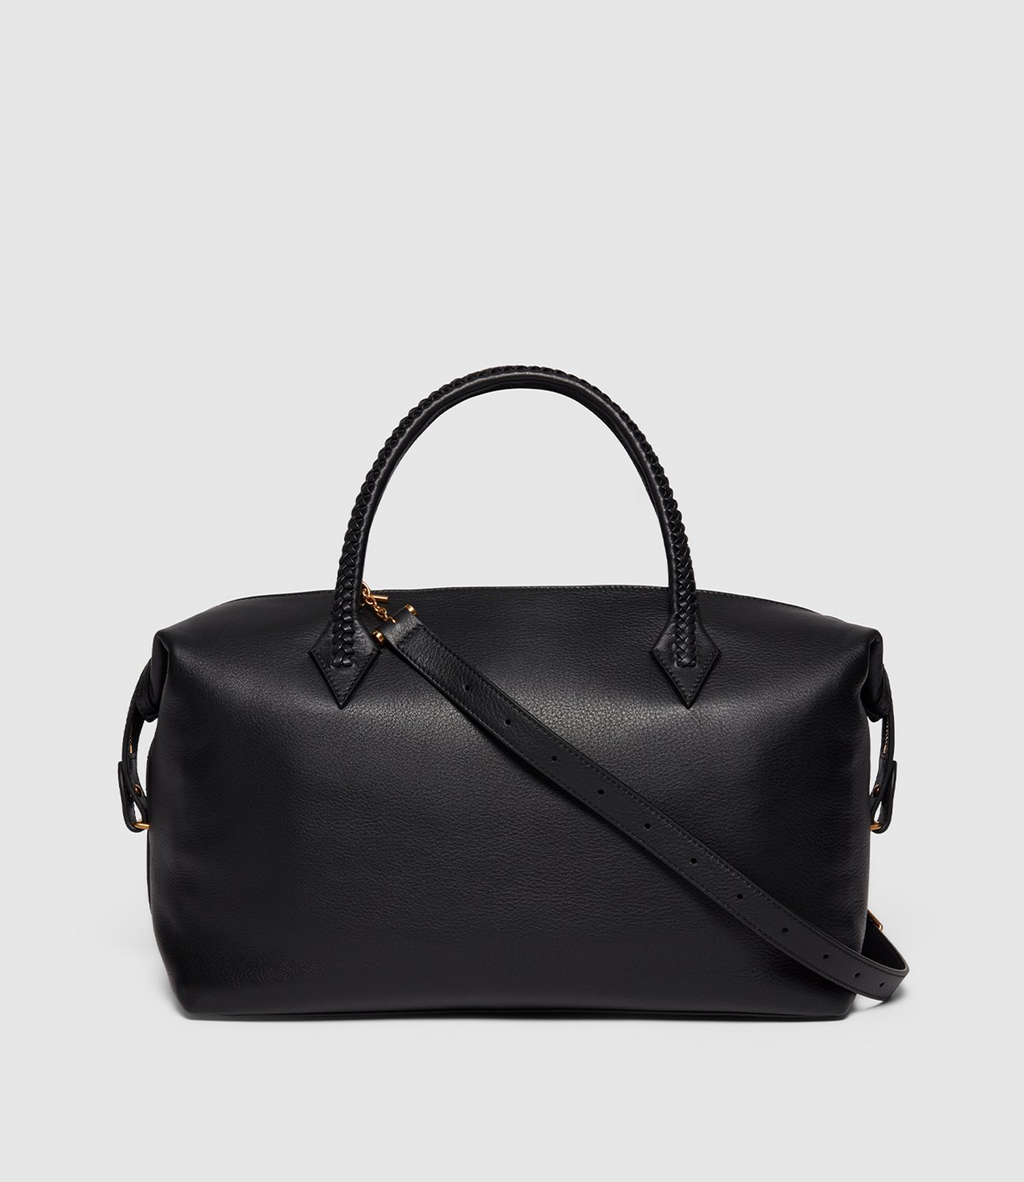 Métier Women's Perriand Handbag Black Leather